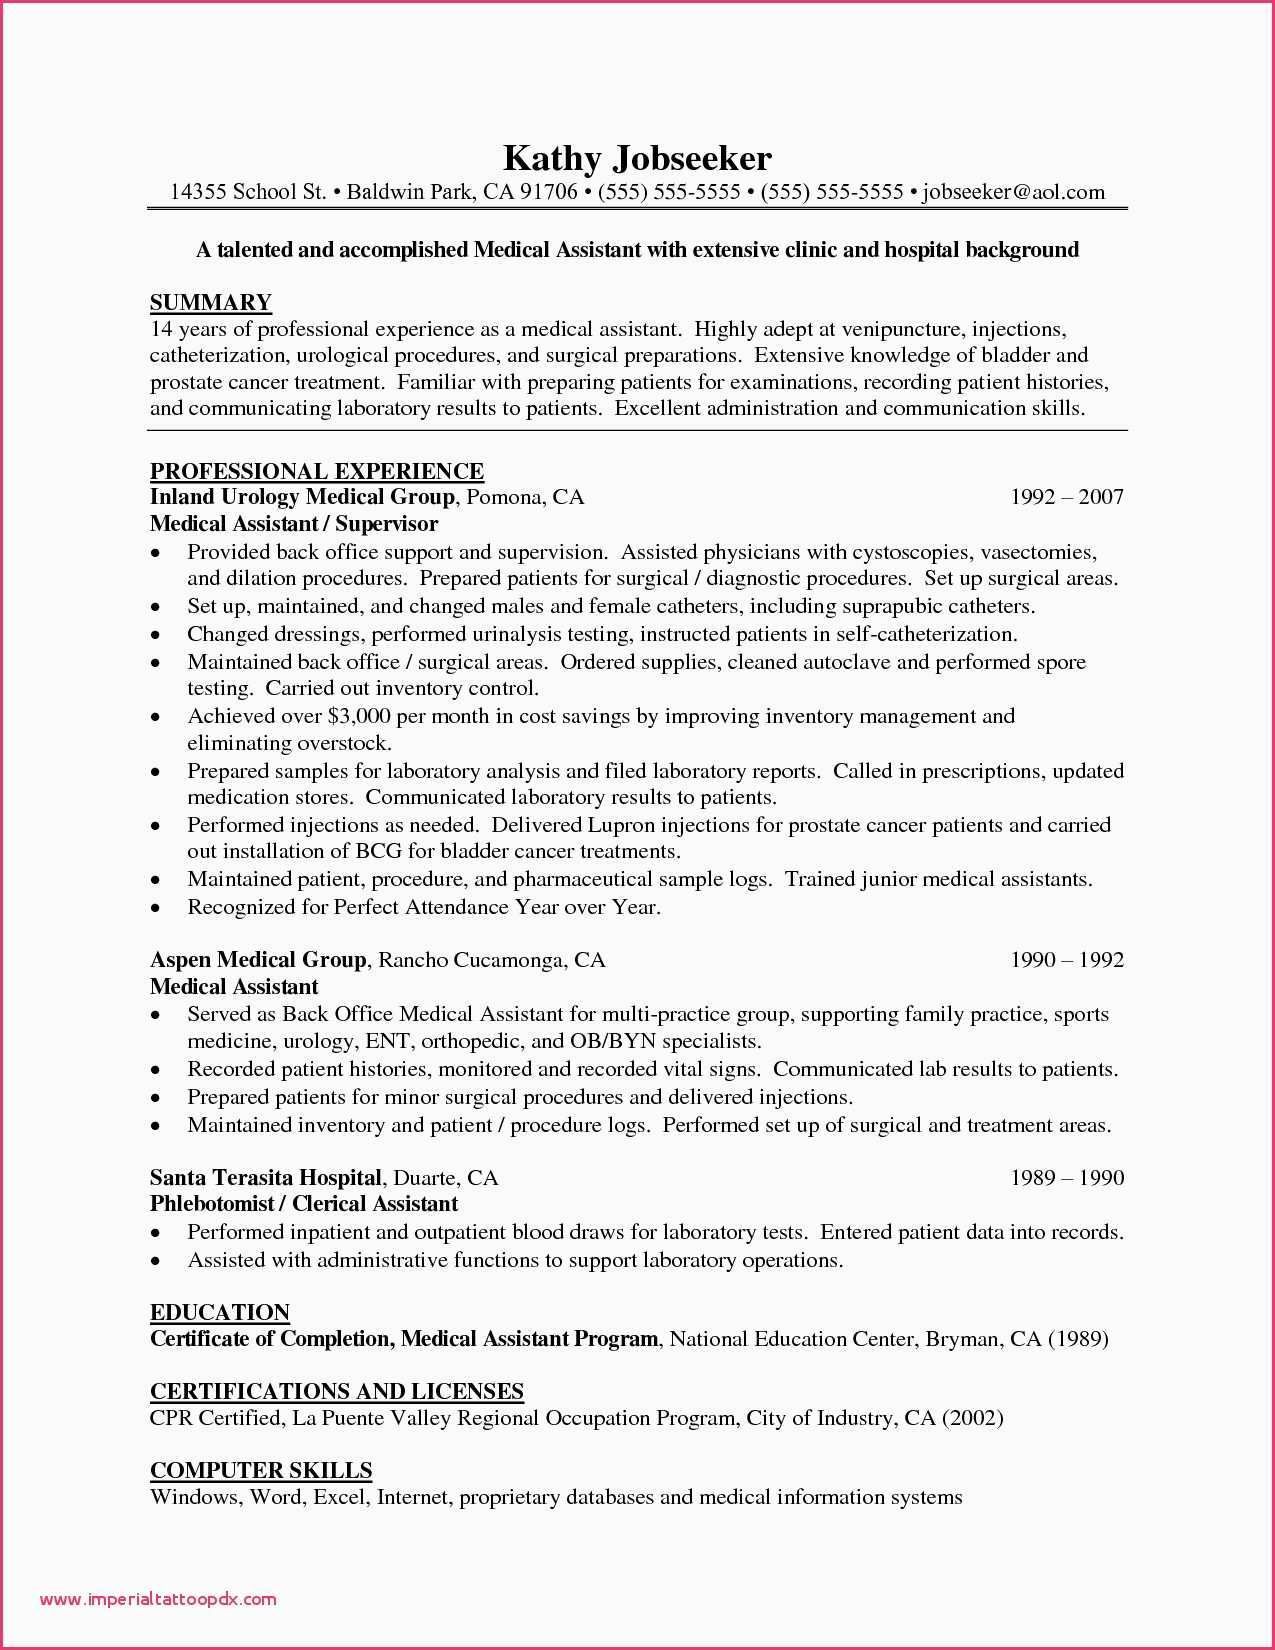 Sample Resume for Administrative assistant Pdf Administrative assistant Resumes Example Medical assistant Resume